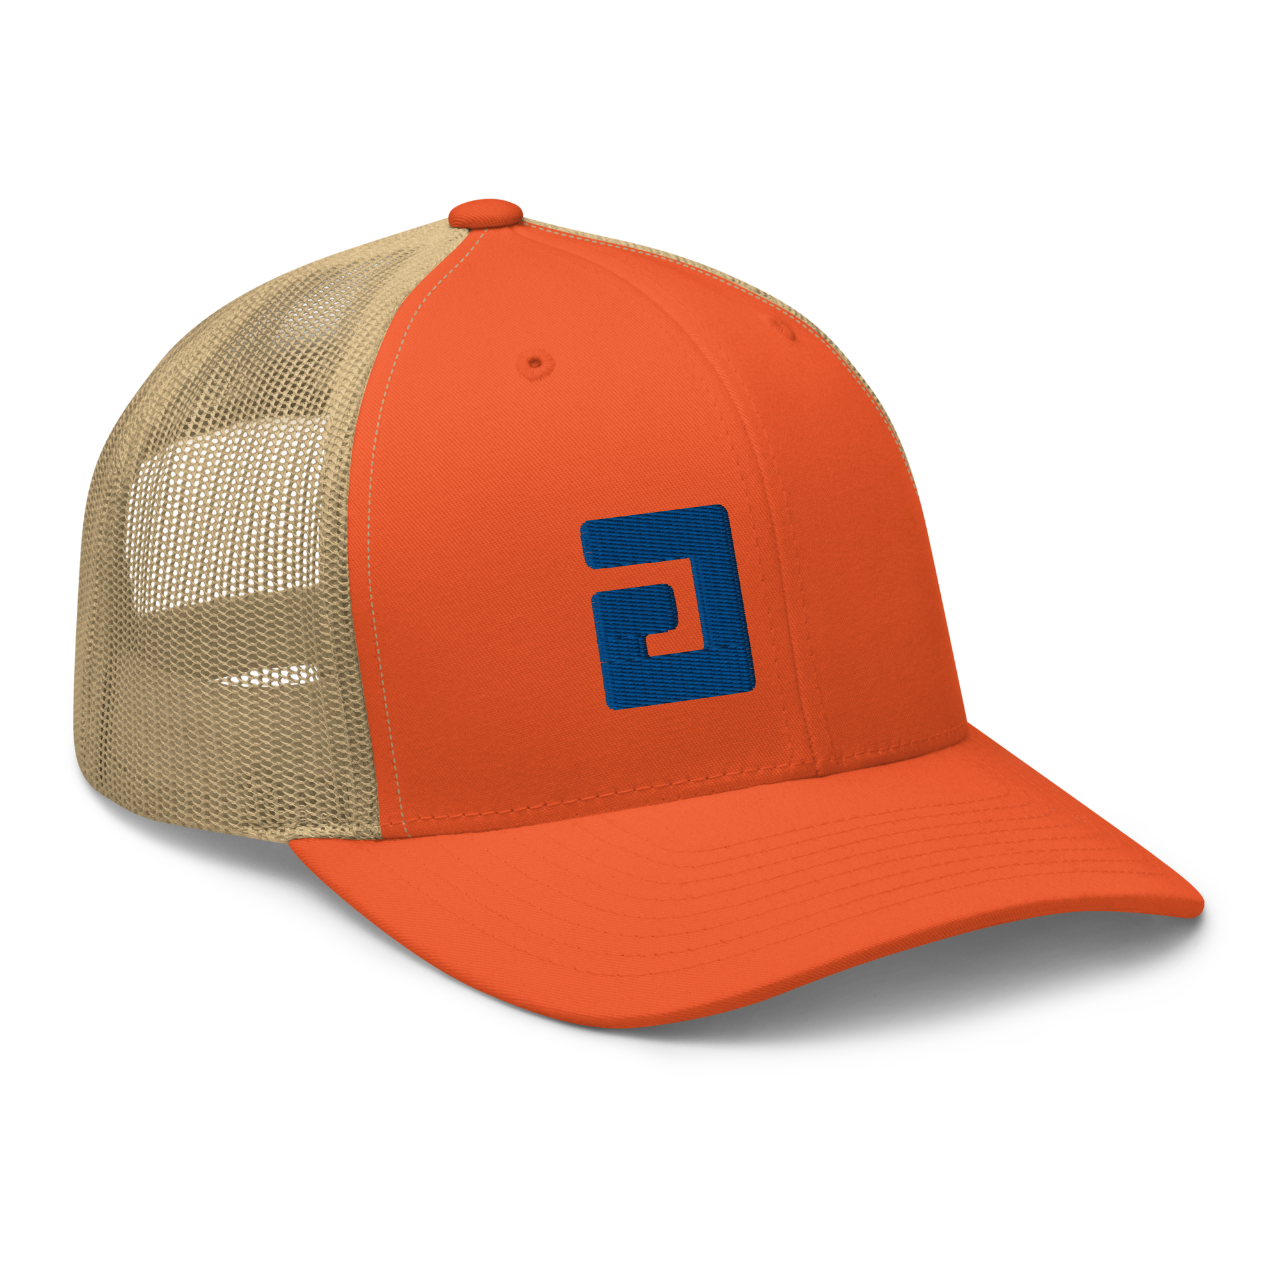 axsgtr axess electronics guitar music industry branded merchandise swag trucker cap hat orange khaki royal